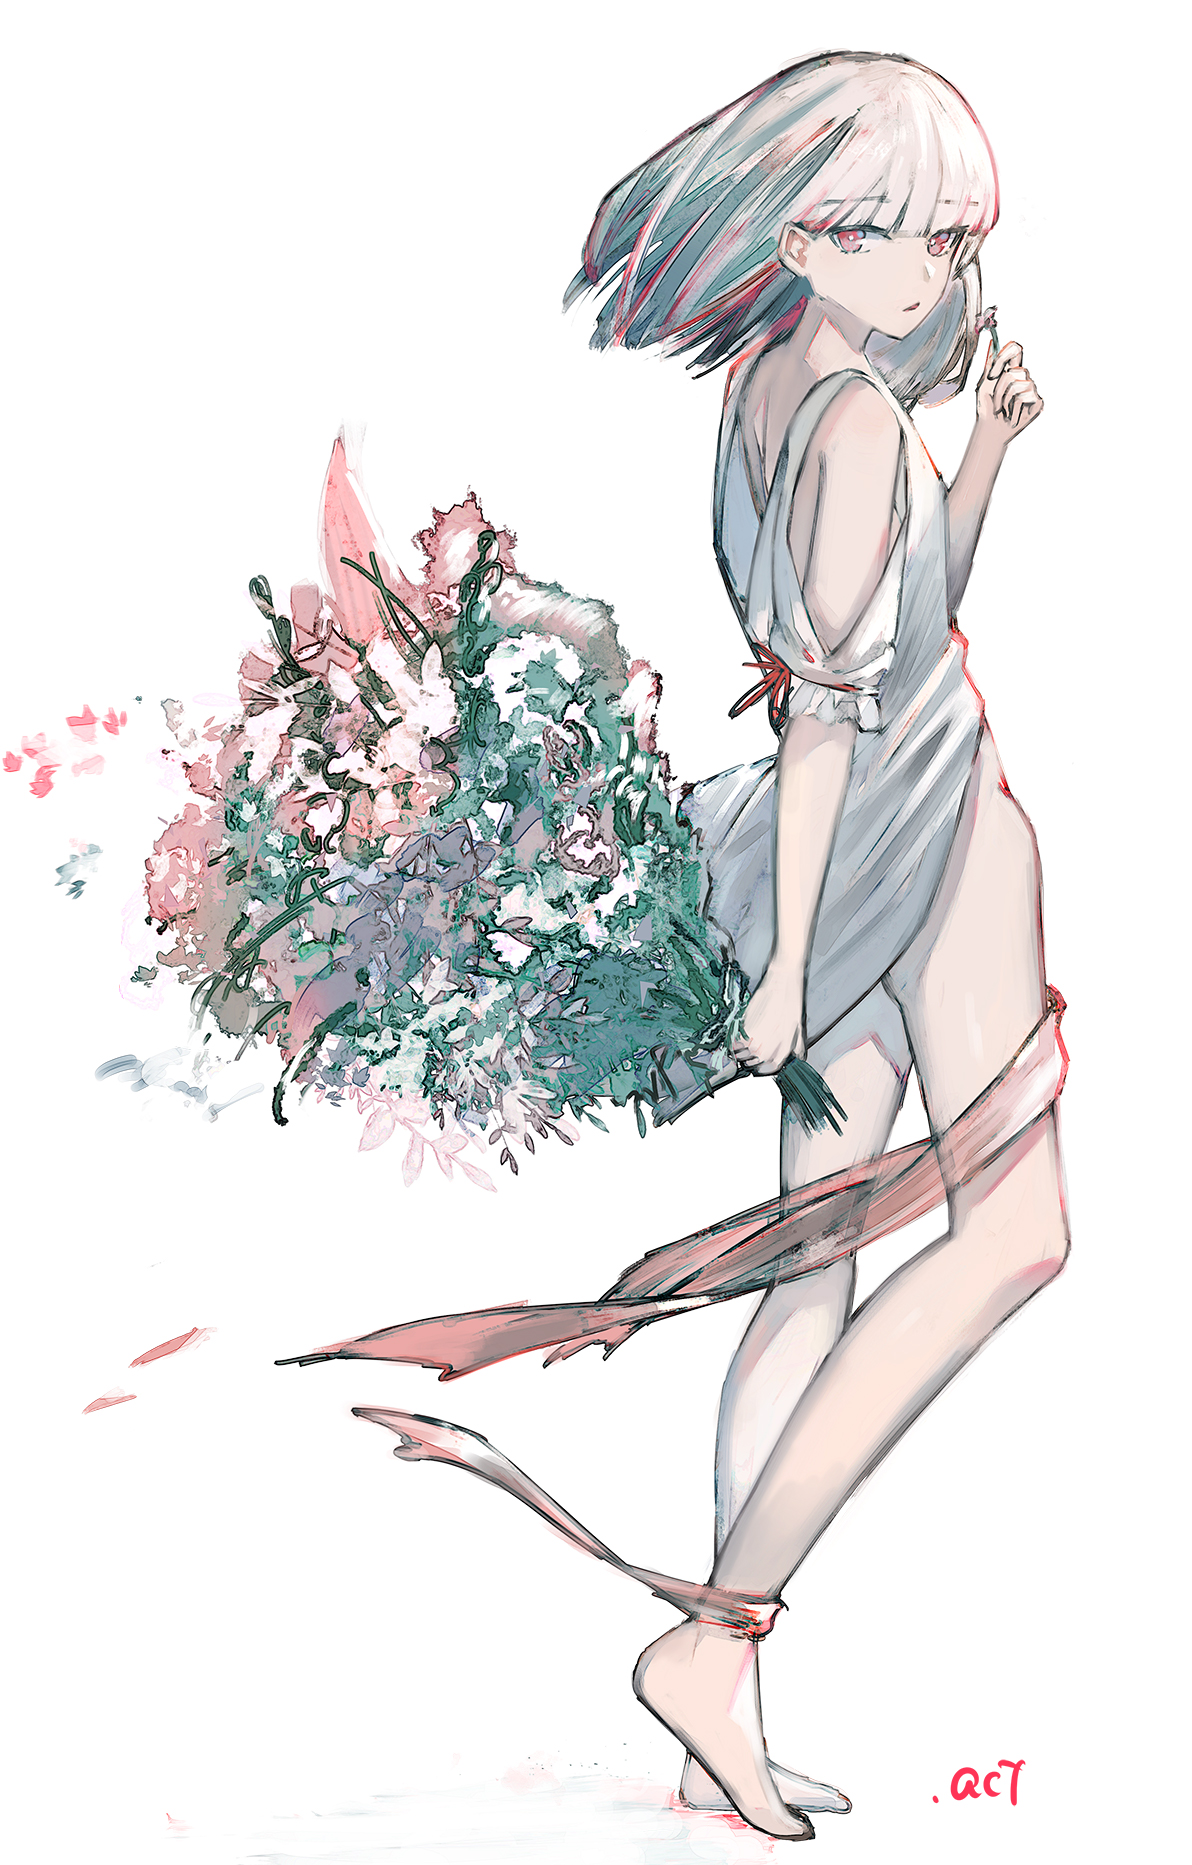 bouquet (of flowers)插画图片壁纸